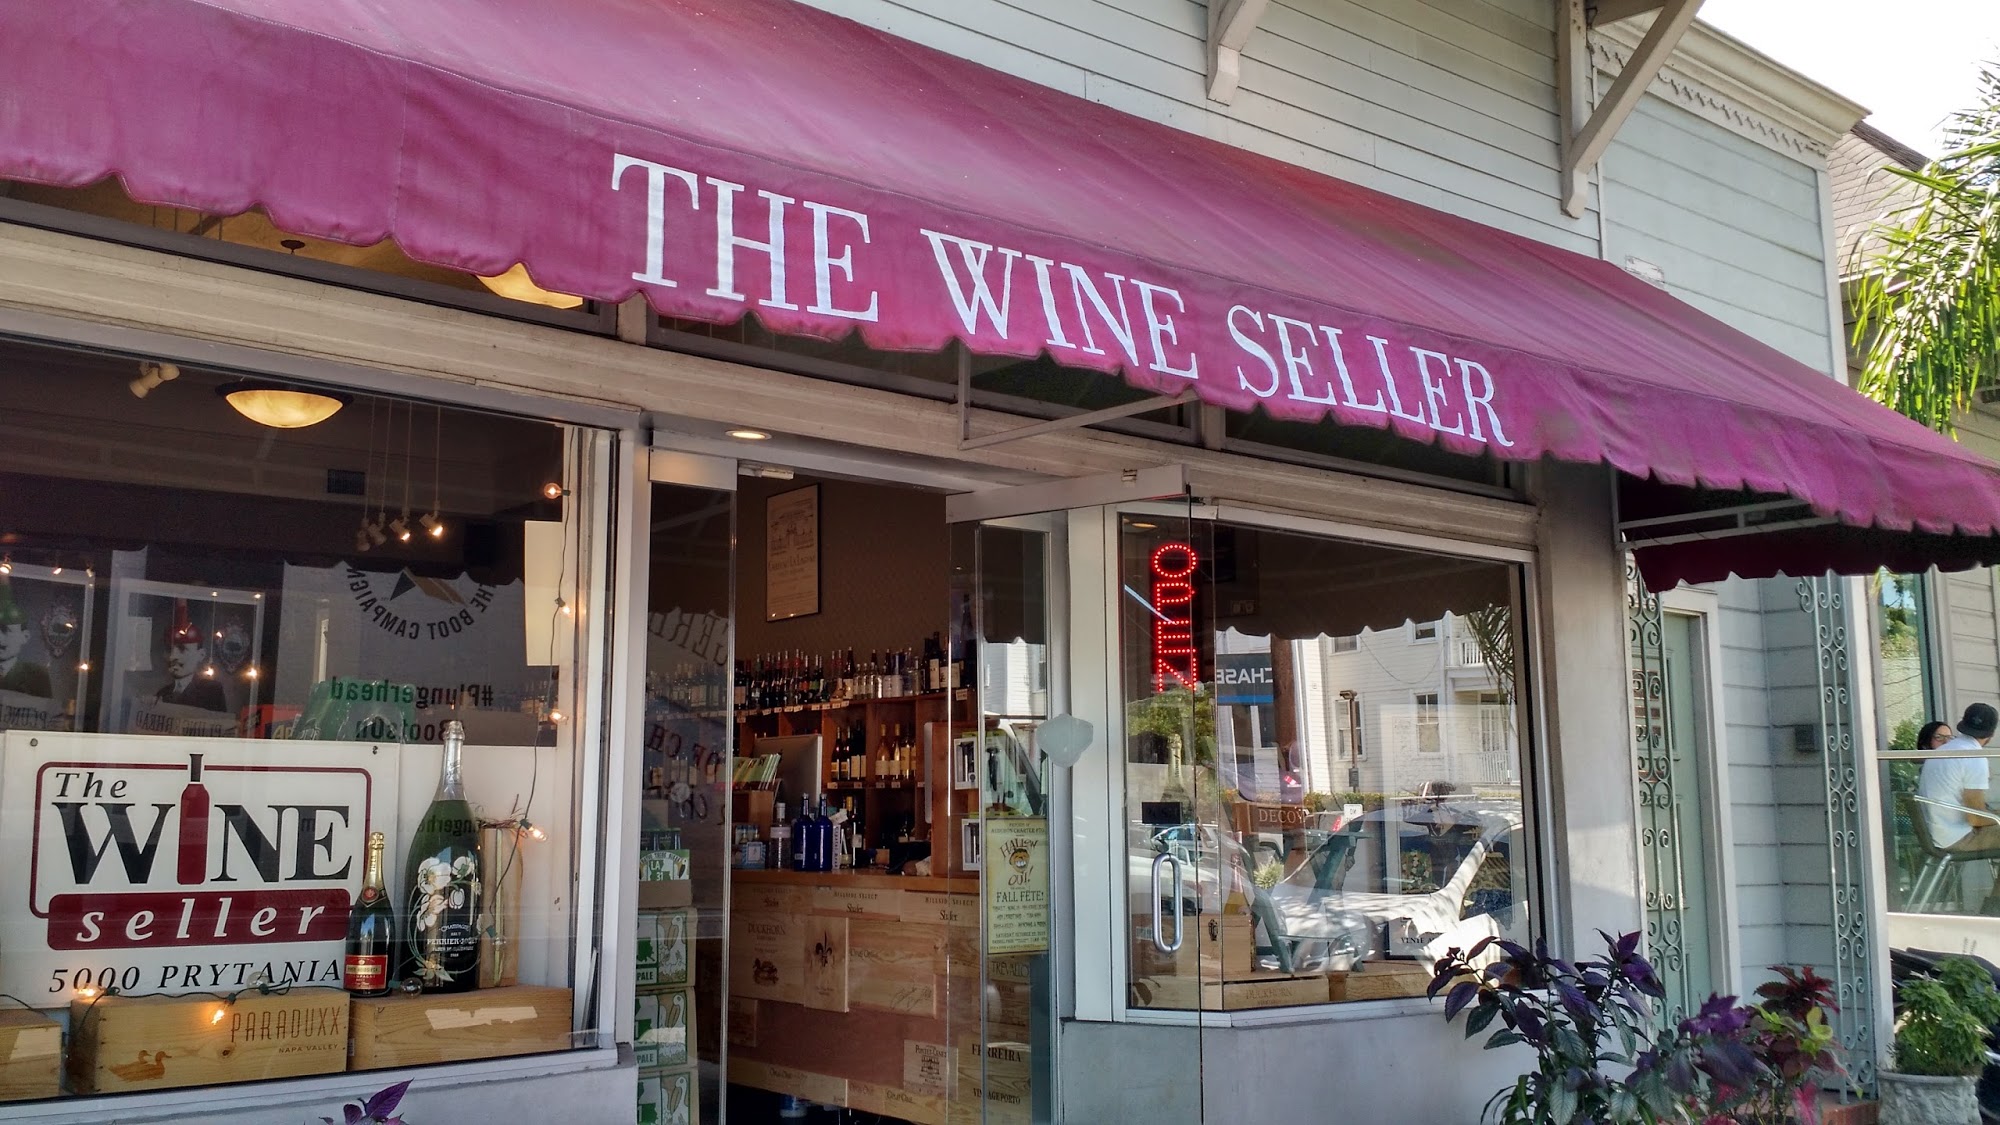 The Wine Seller